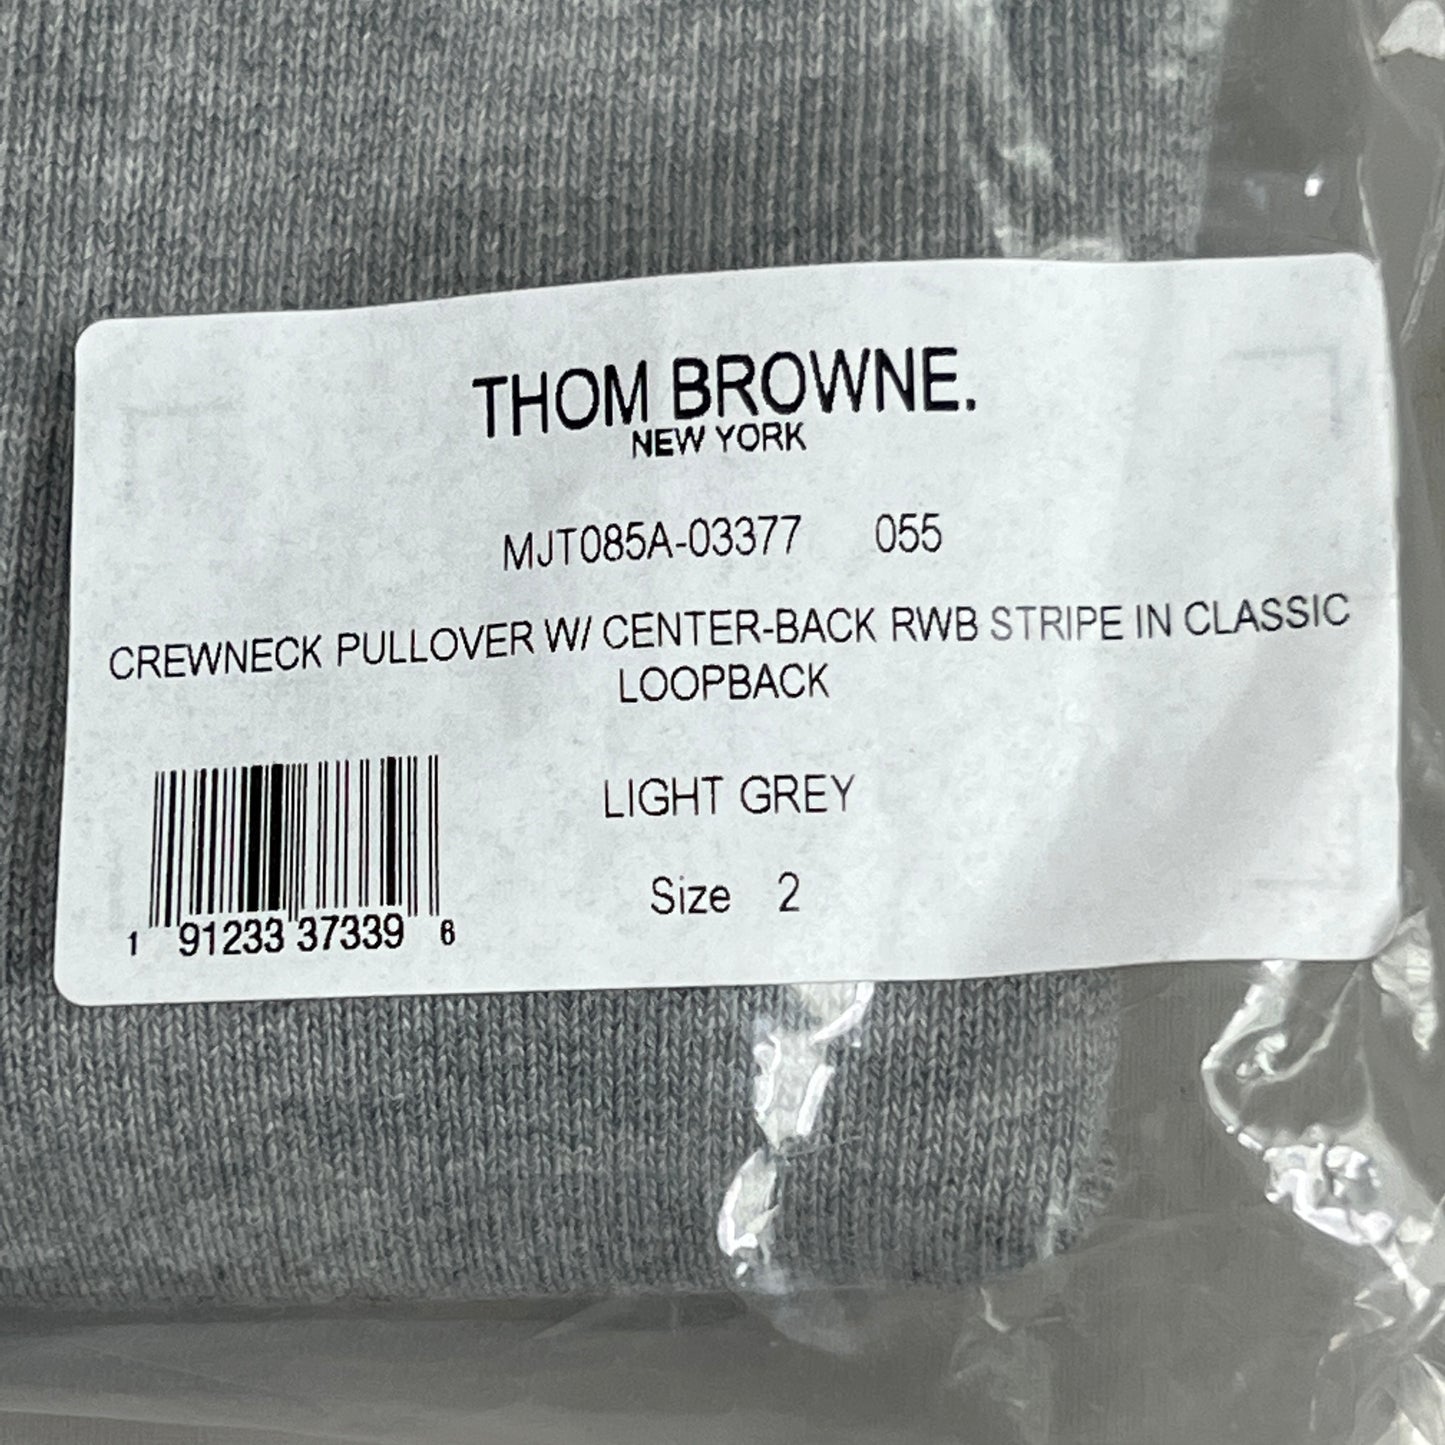 THOM BROWNE Crewneck Pullover w/Center-Back RWB Stripe in Classic Loopback Light Grey Size 2(New)